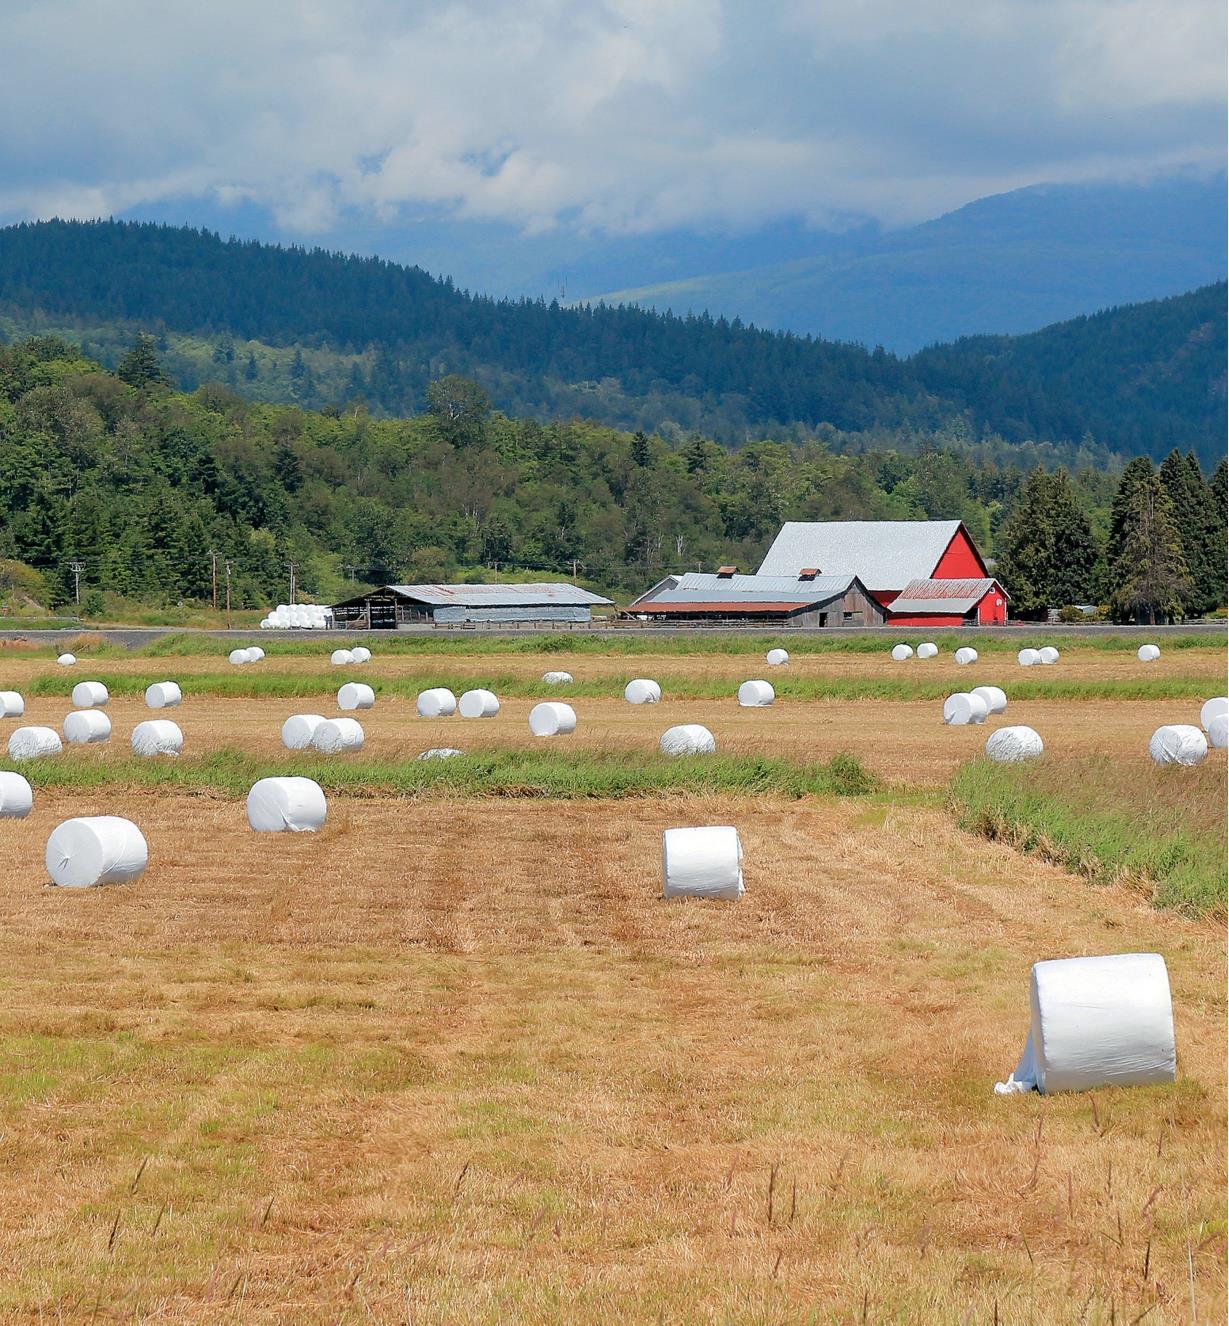 Hay bales wrapped in polyethylene sheeting in a farm field